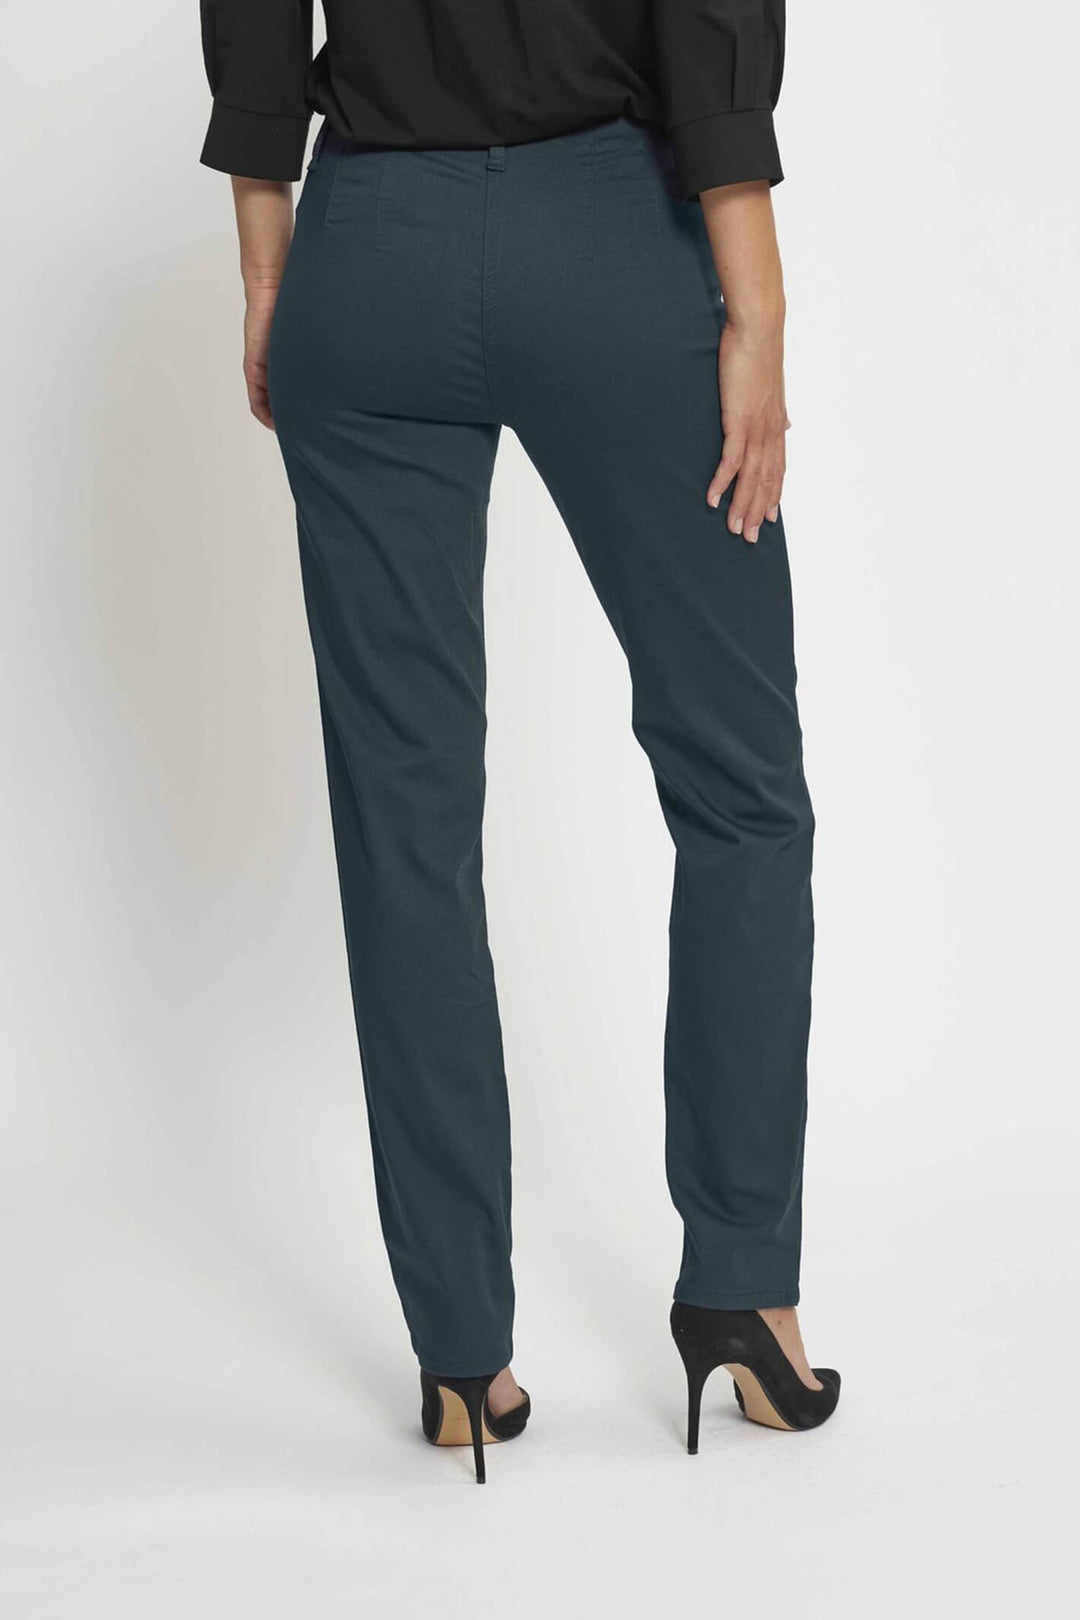 LauRie 27316 48000 Kelly Medium Length Dark Slate Trousers - Shirley Allum Boutique